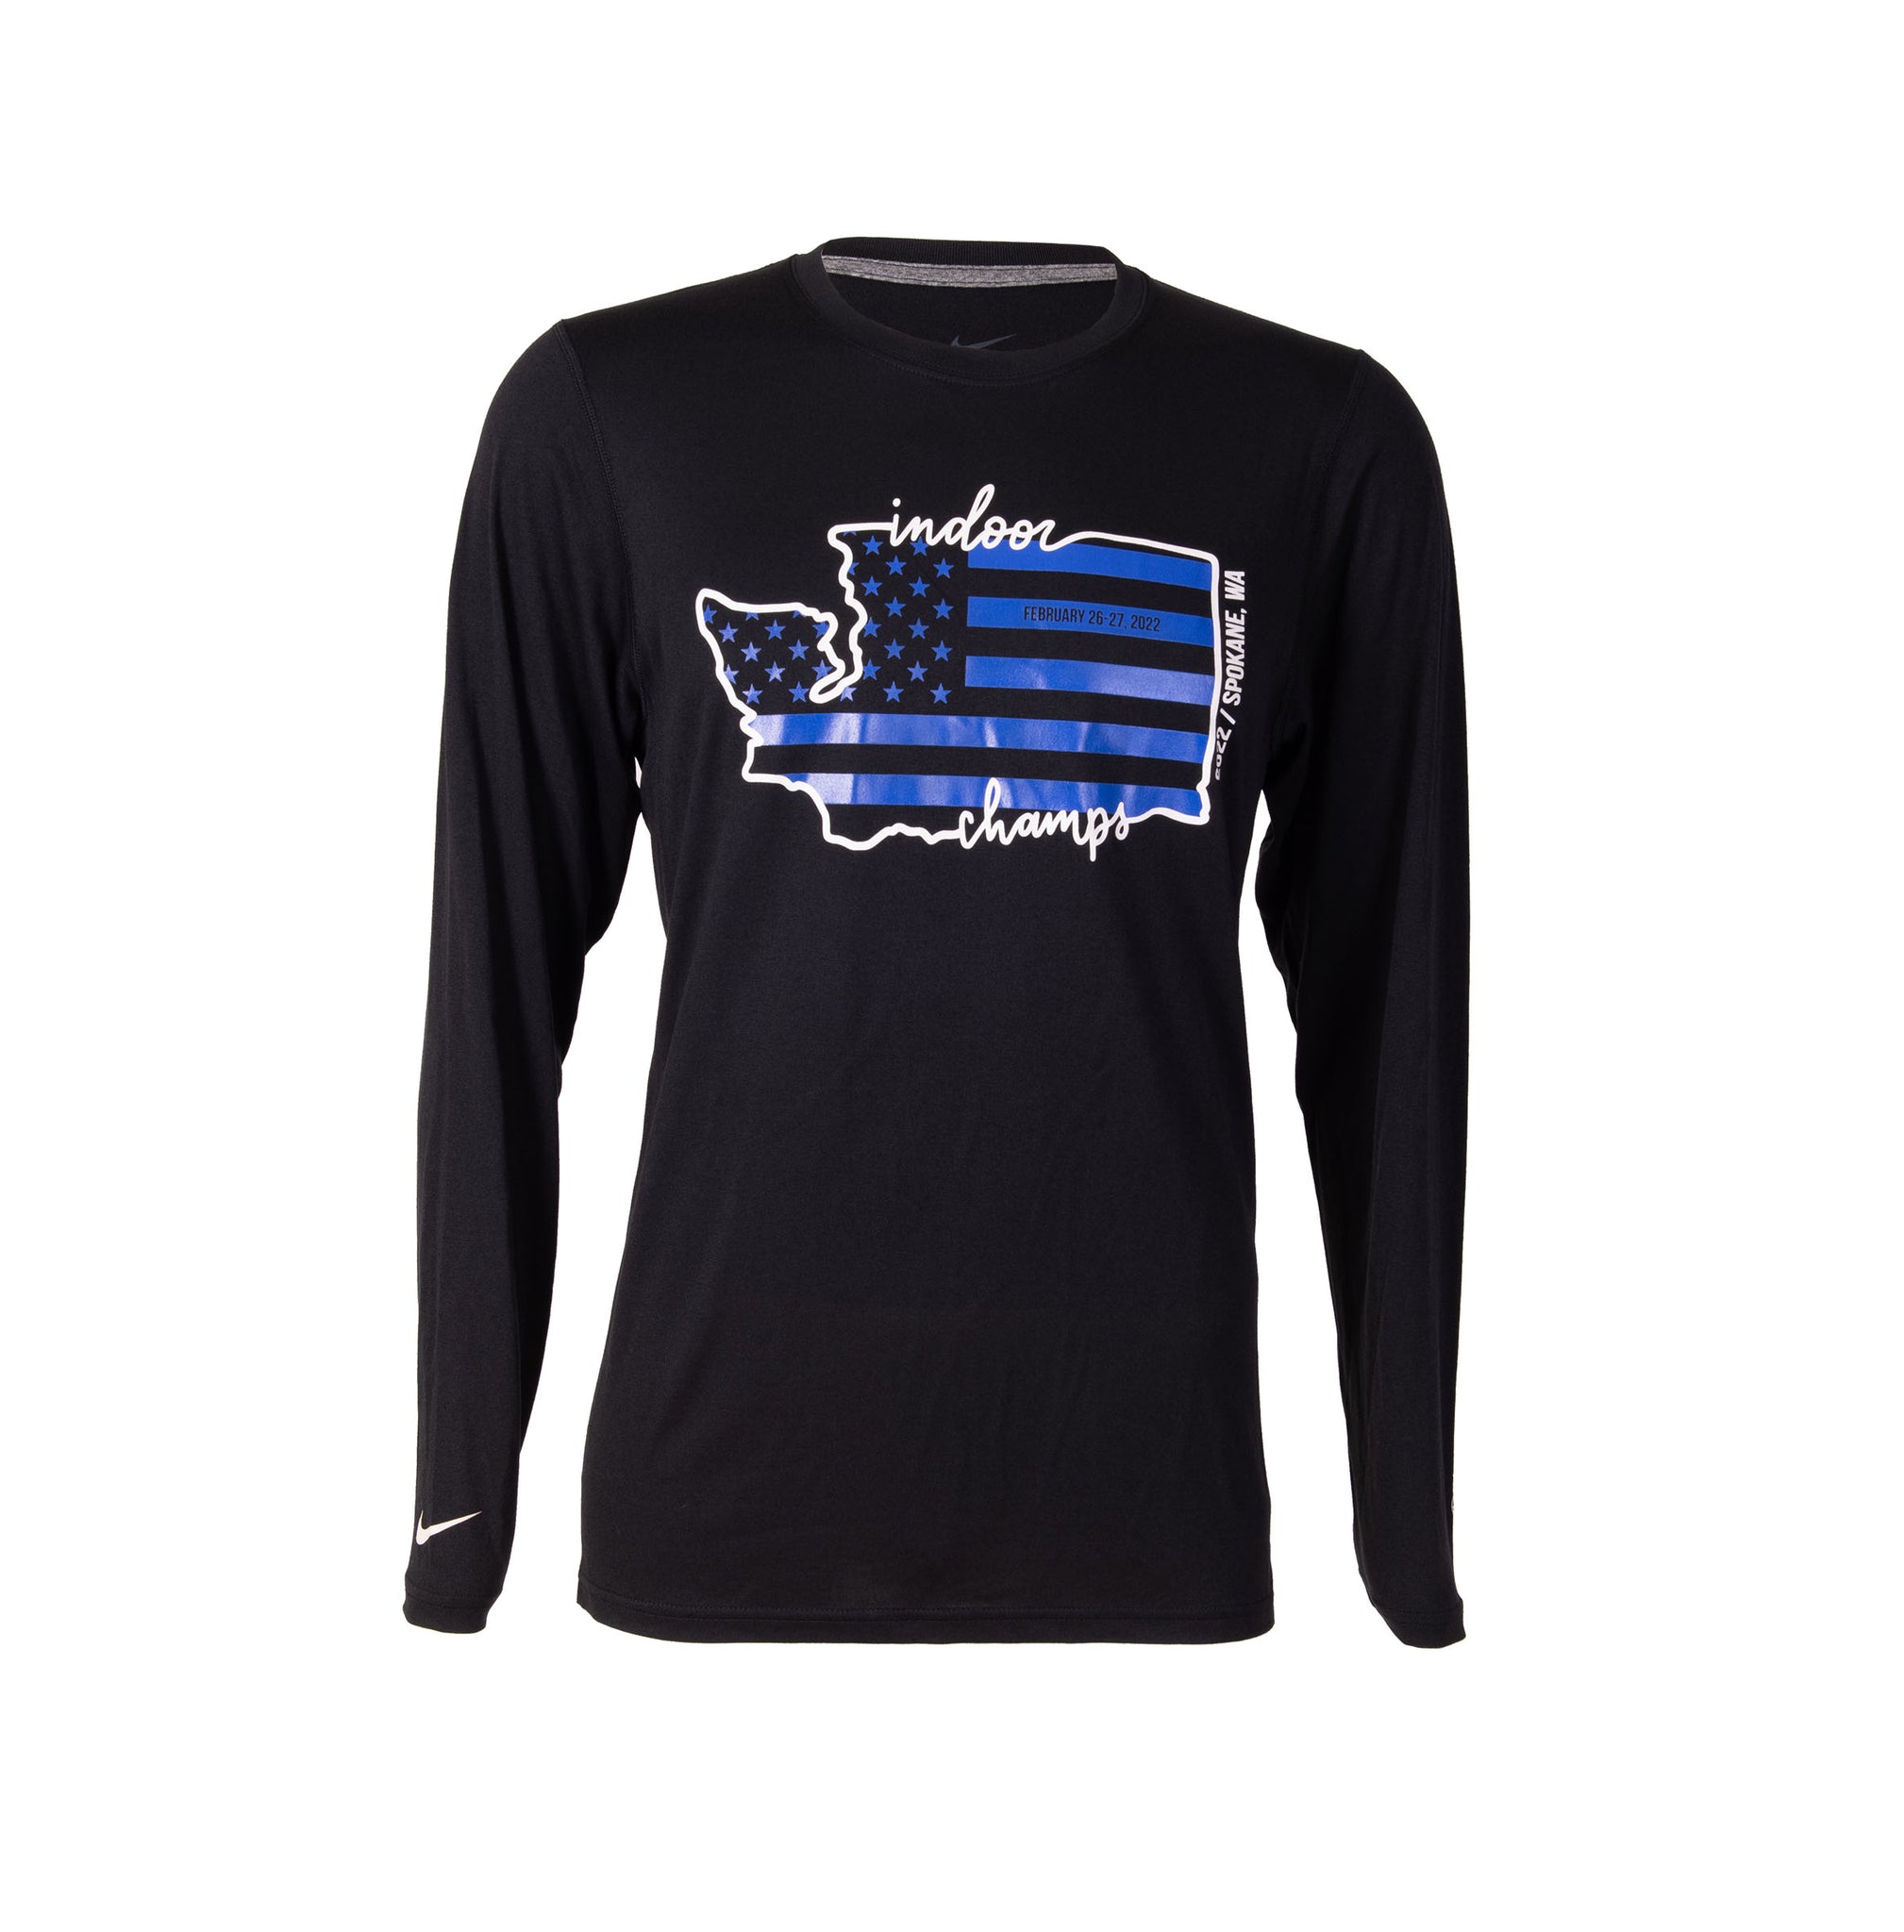 2021 American League West Division Champions Houston Astros Baseball T-shirt  - Tentenshirts